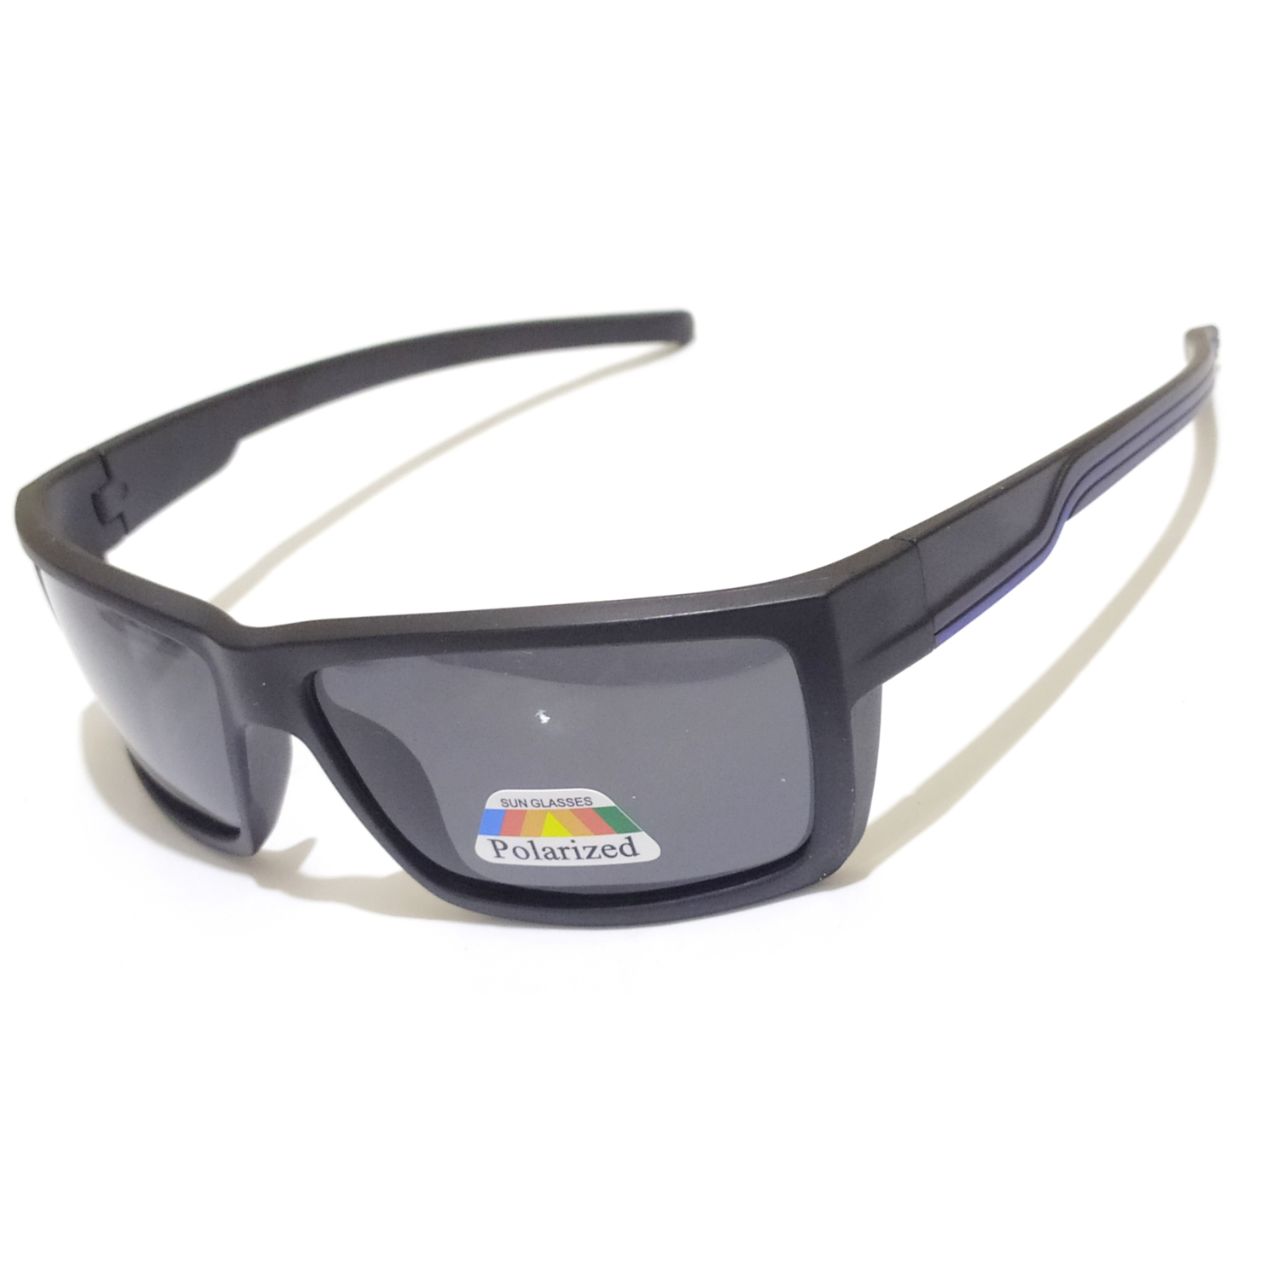 Sapphire Matt Black Polarized Cycling Driving Polarized Sunglasses Riding Glasses 9463MBKBL